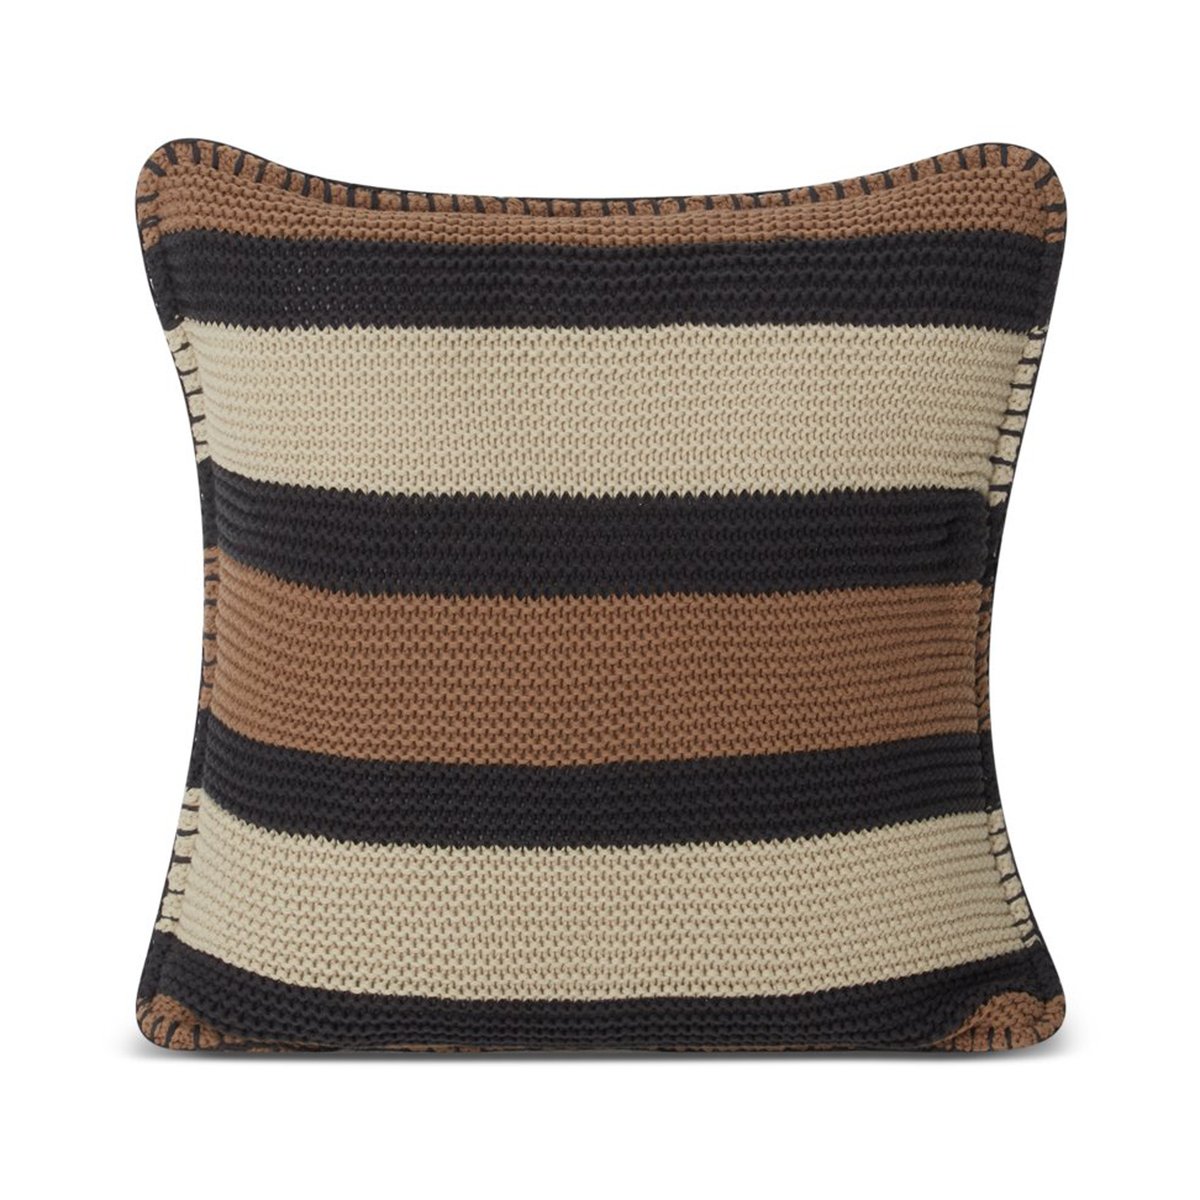 Bilde av Lexington Striped Knitted Cotton putetrekk 50 x 50 cm Brown-dark gray-light beige